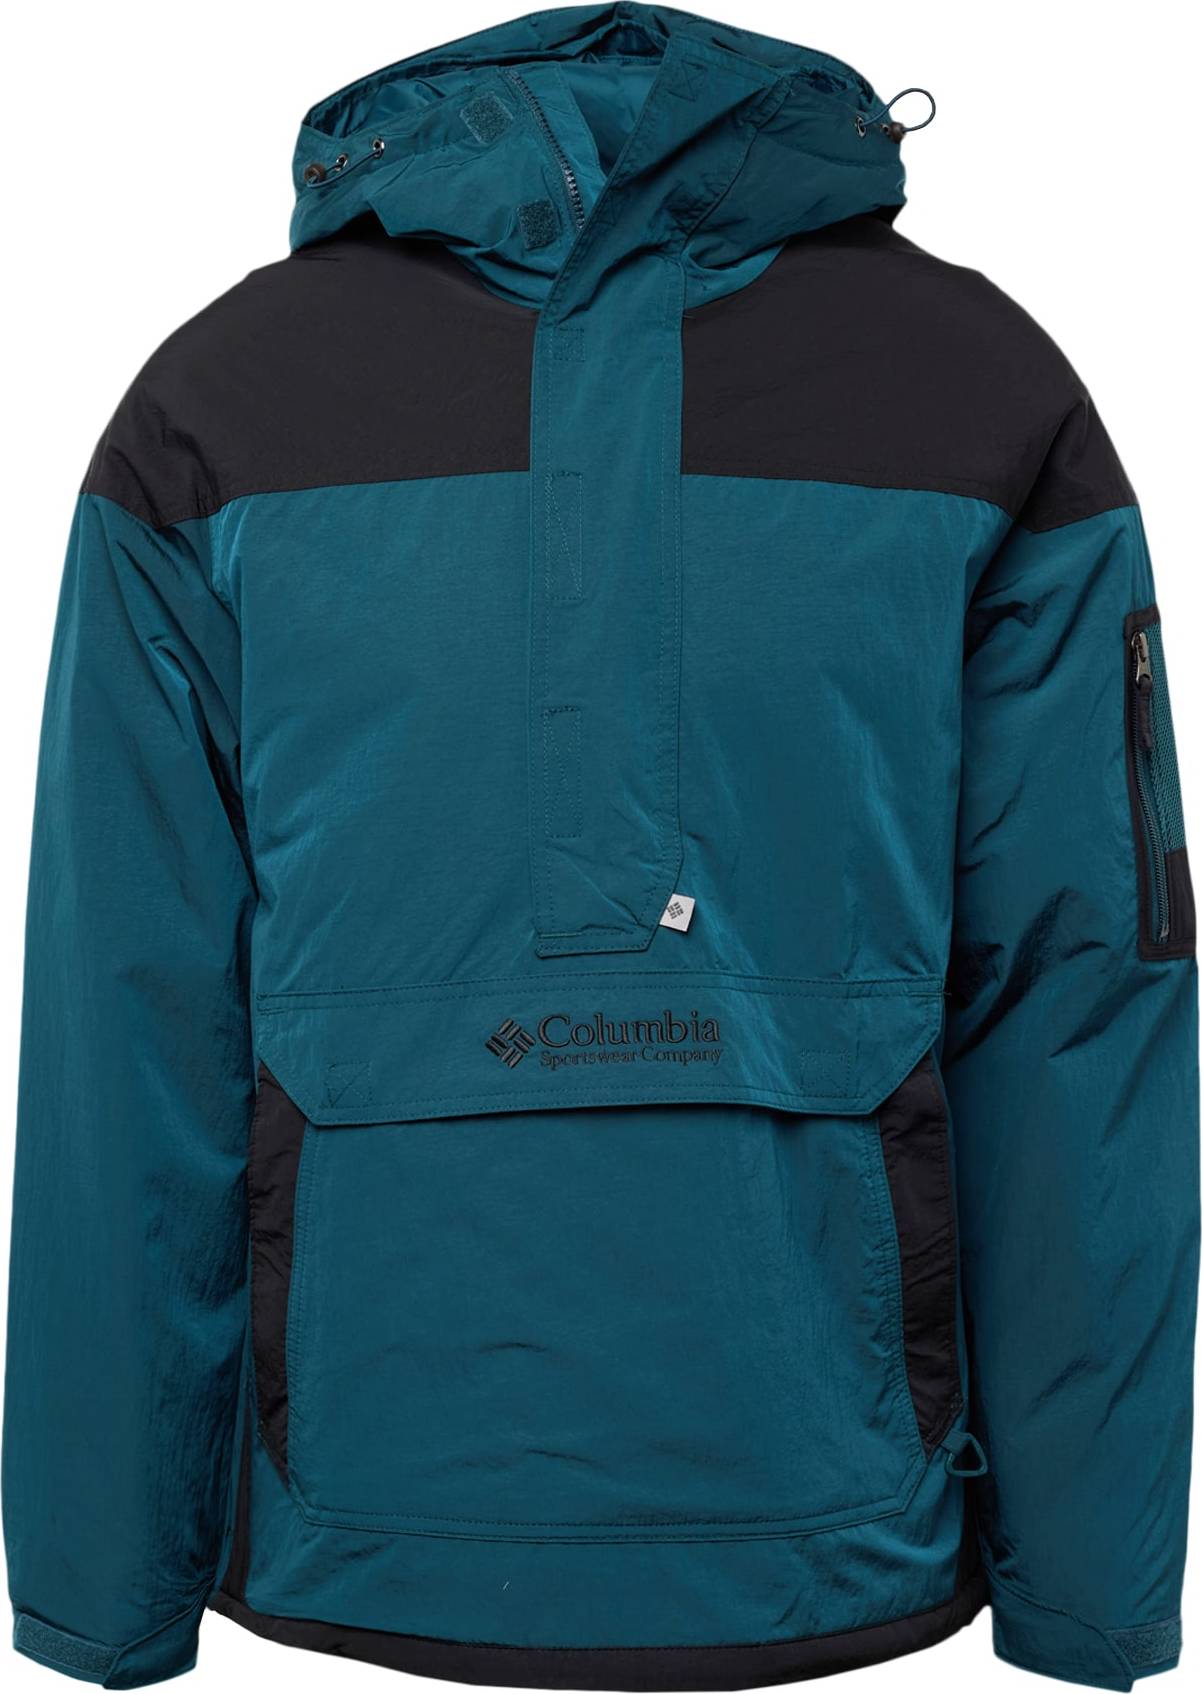 Outdoorová bunda Columbia tmavě modrá / černá